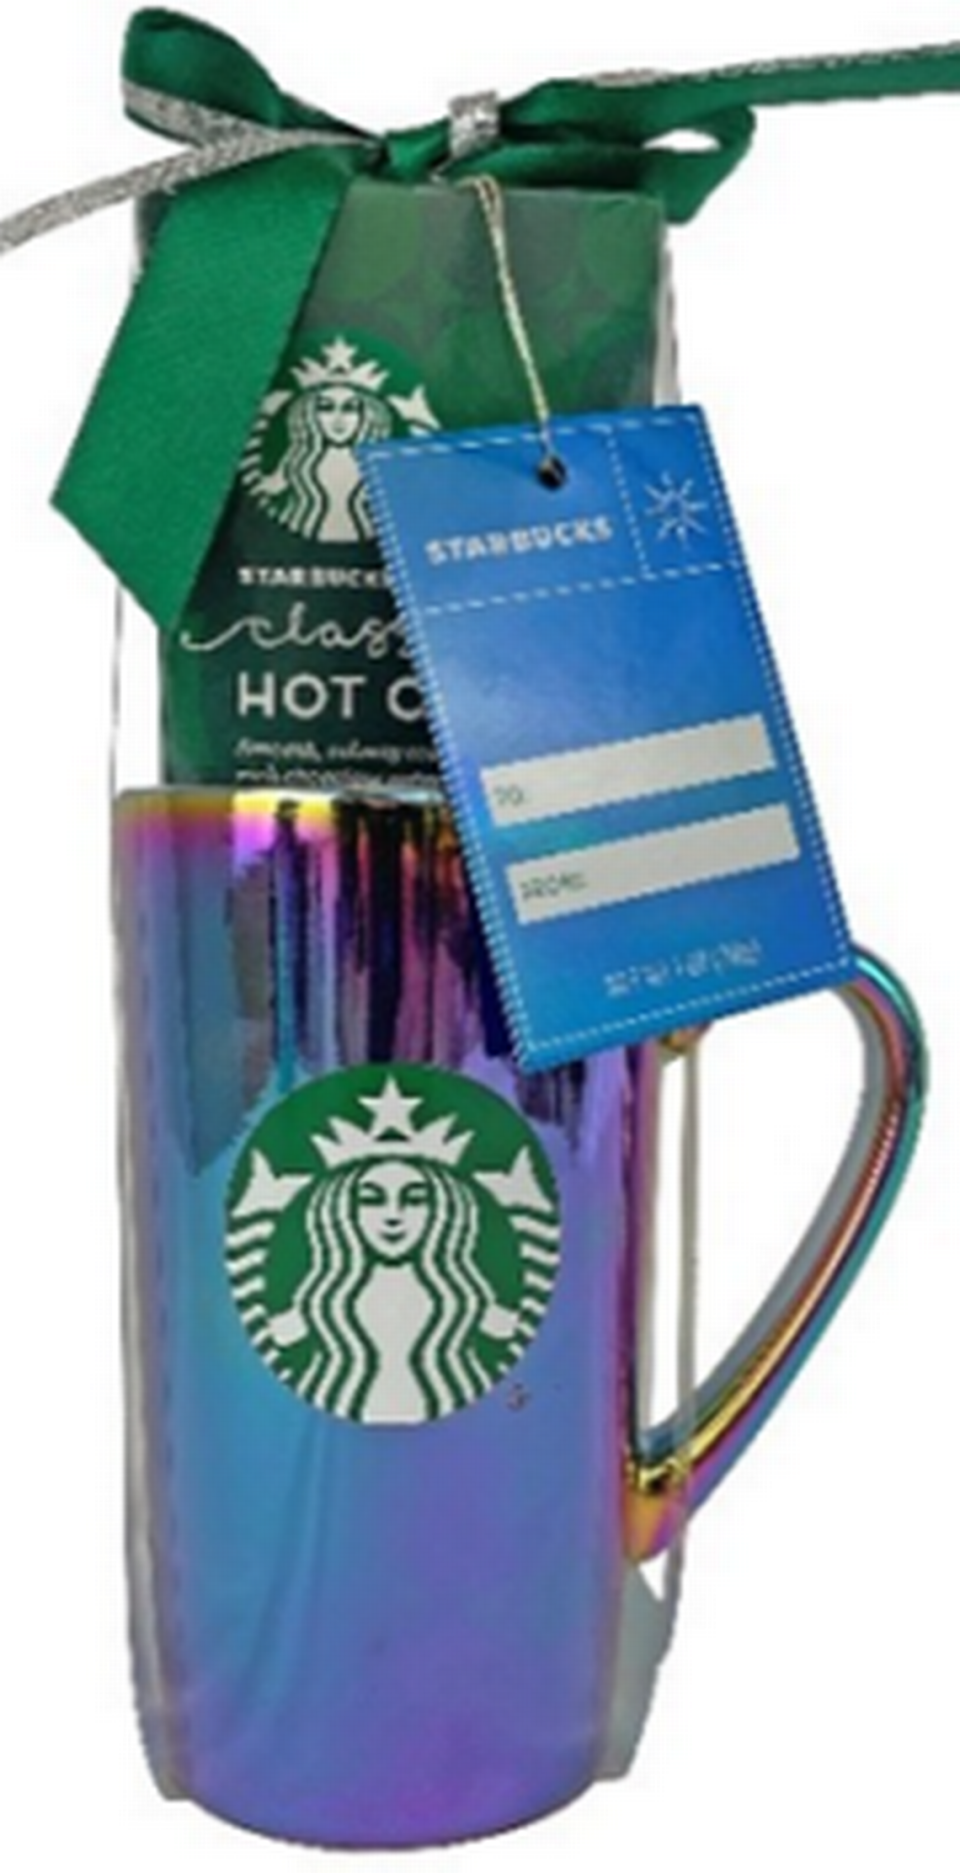 Recalled mug from Starbucks Classic Hot Cocoa and Mug gift set.